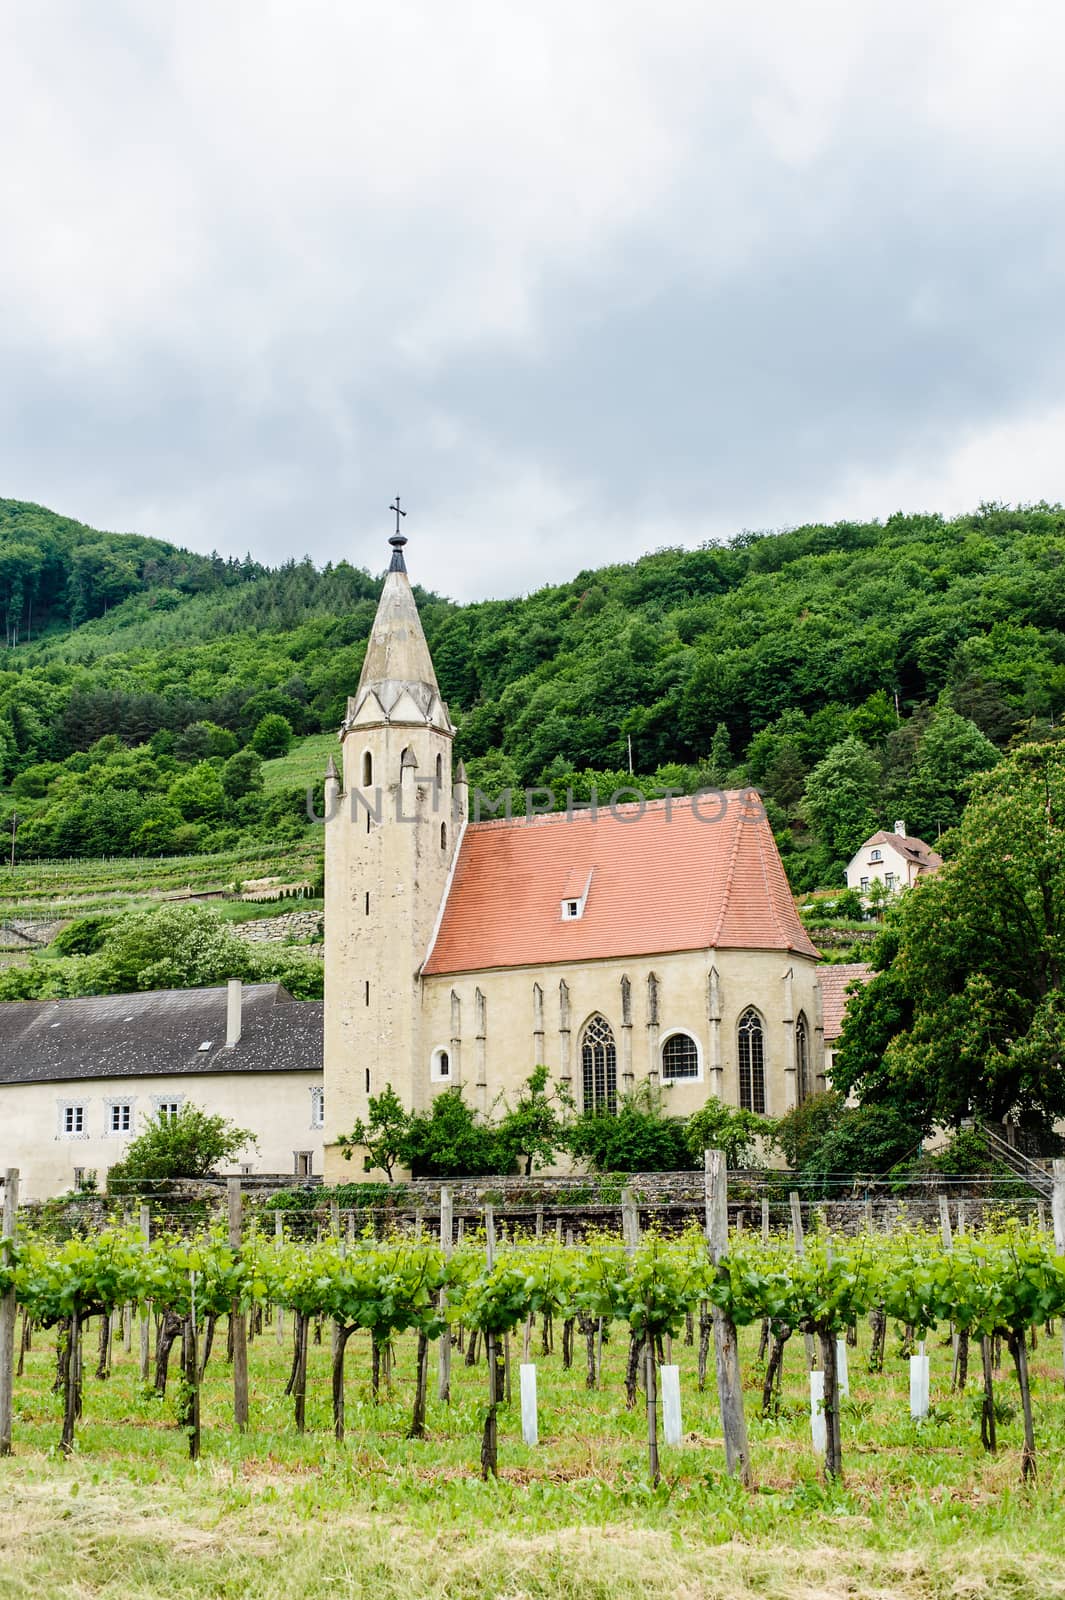 Church in the Vineyard, taken in Wachau